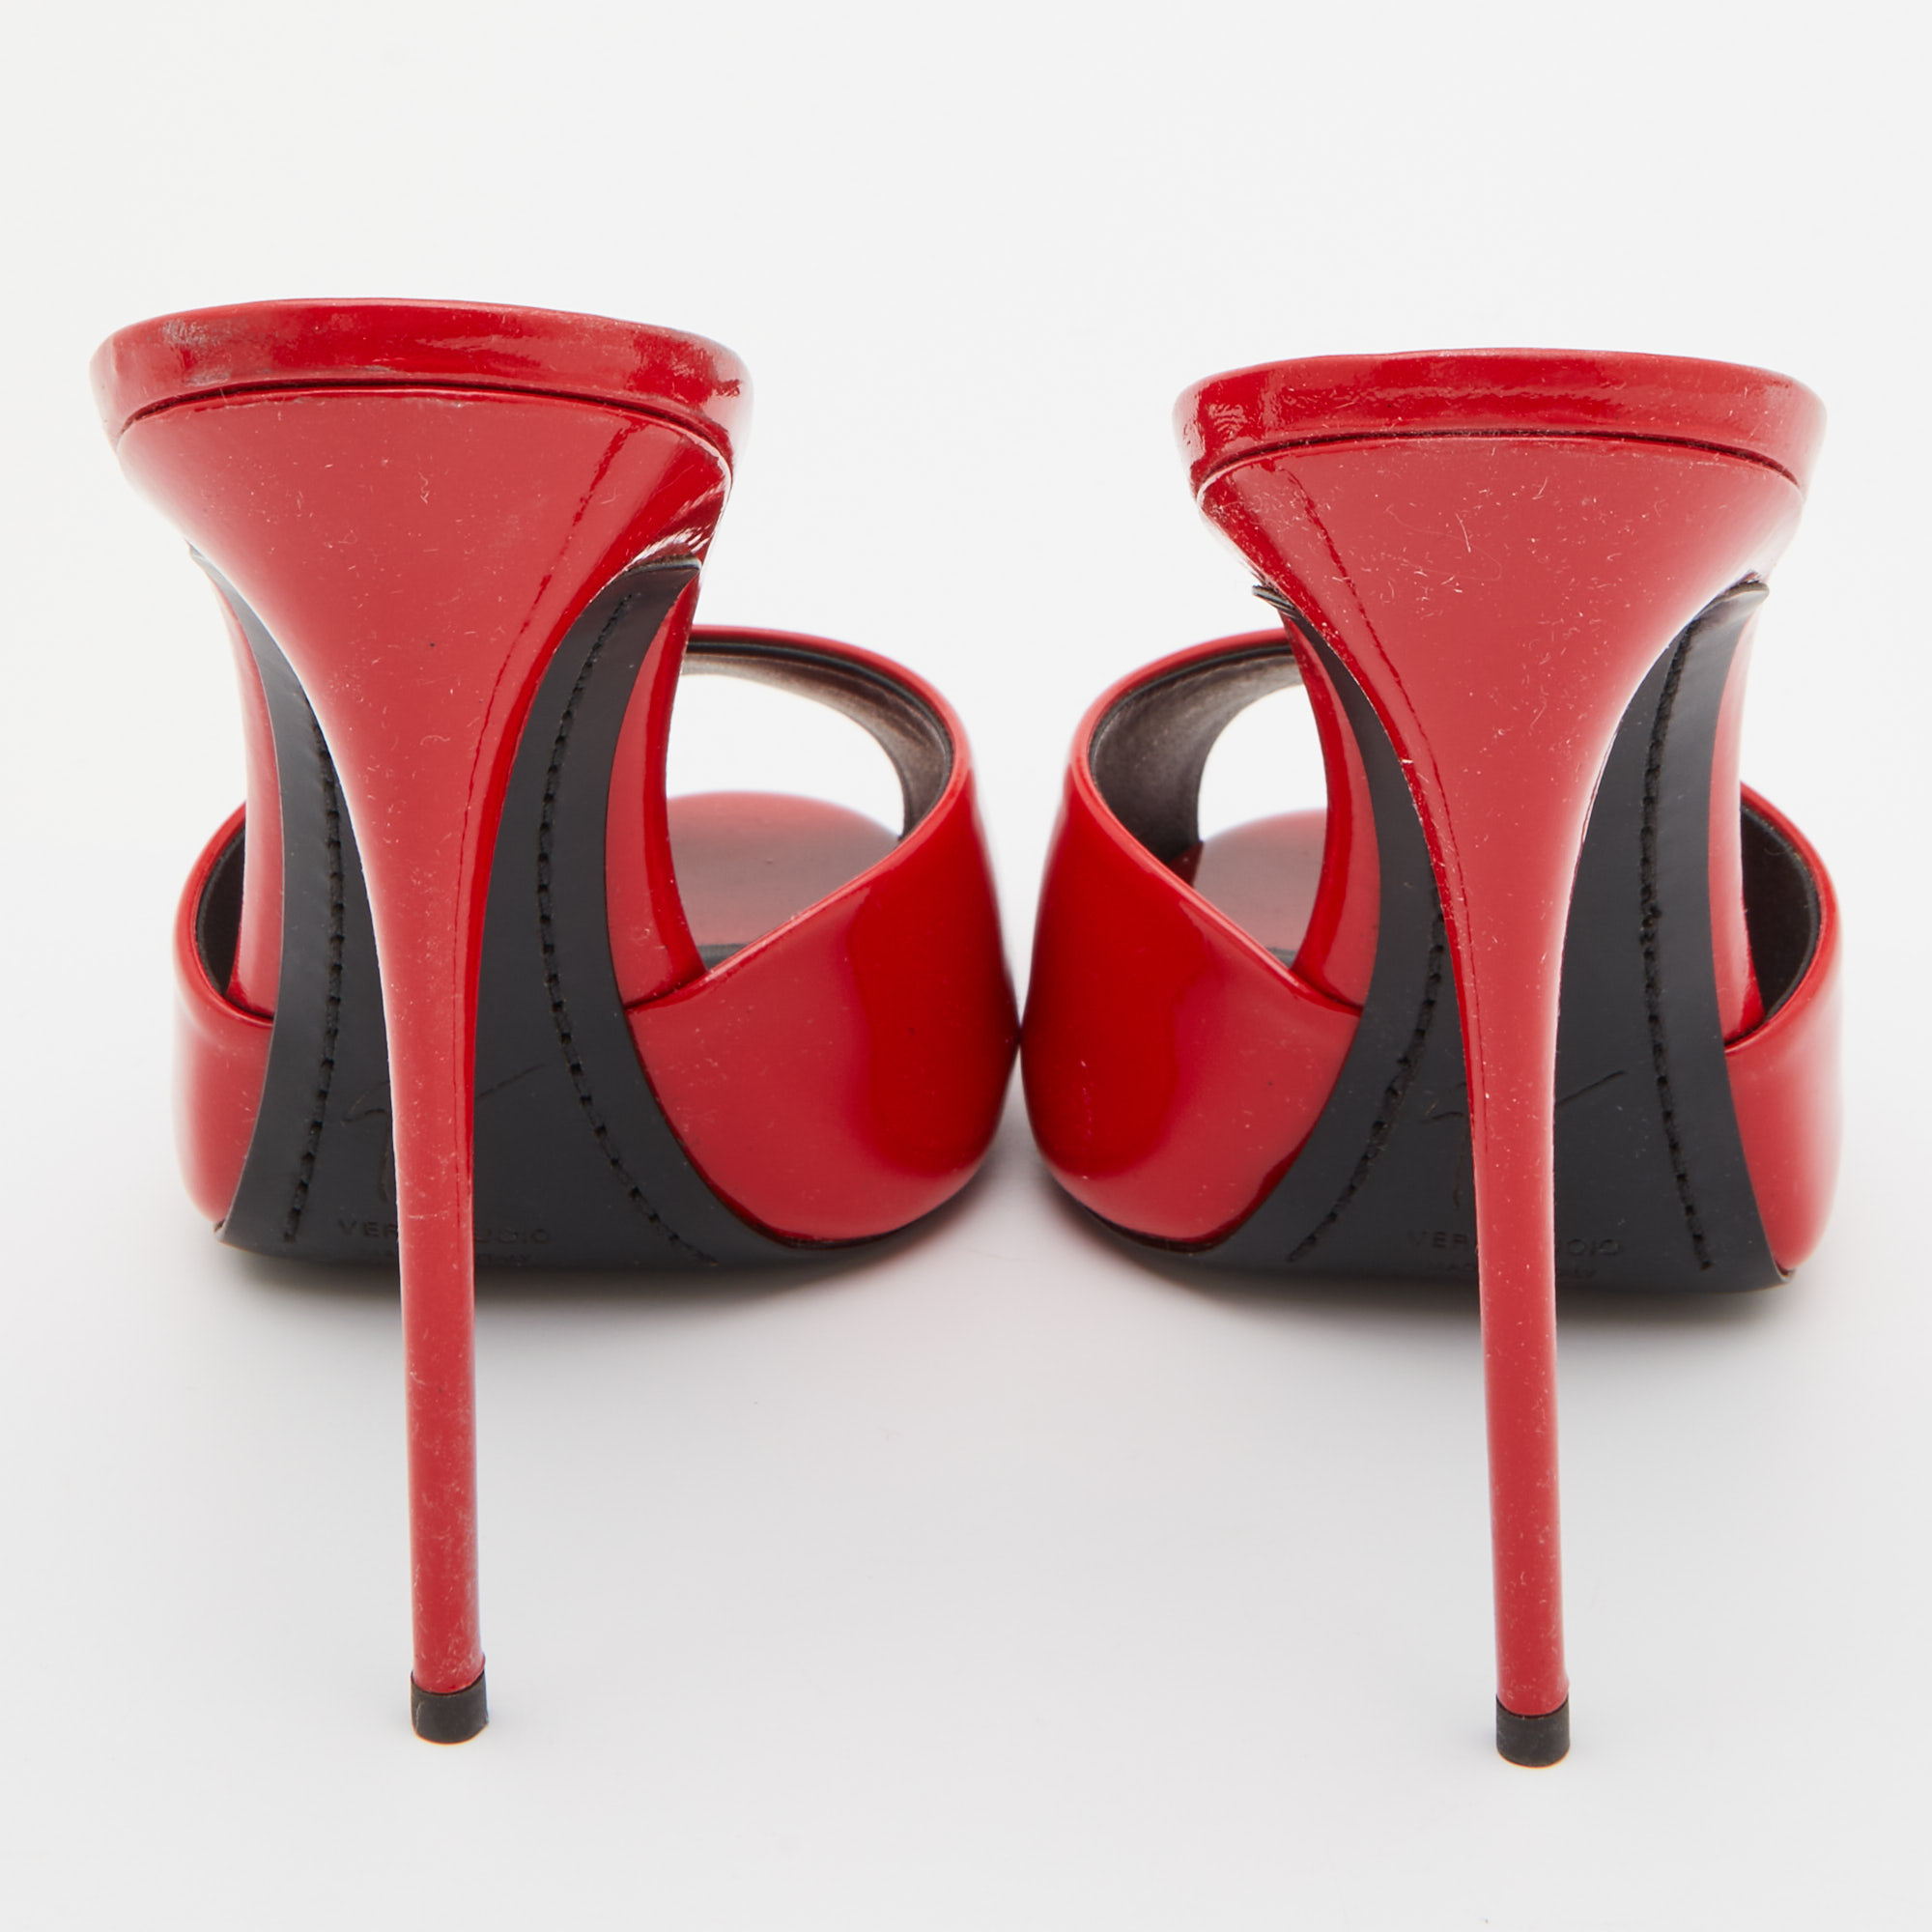 Giuseppe Zanotti Red Patent Leather Slide Sandals Size 40